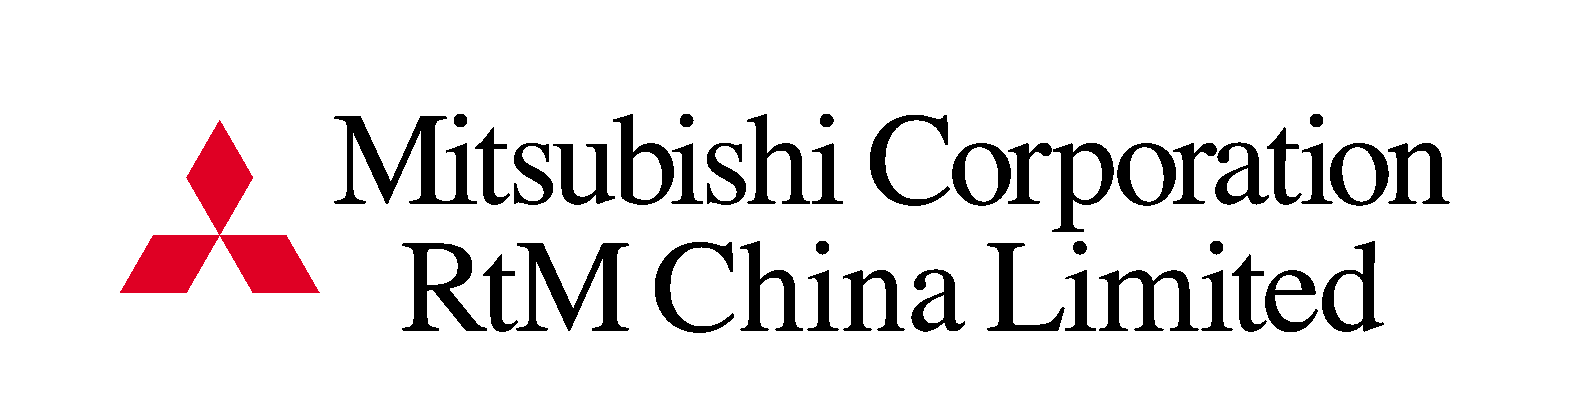 Mitsubishi Corporation RtM China Limited